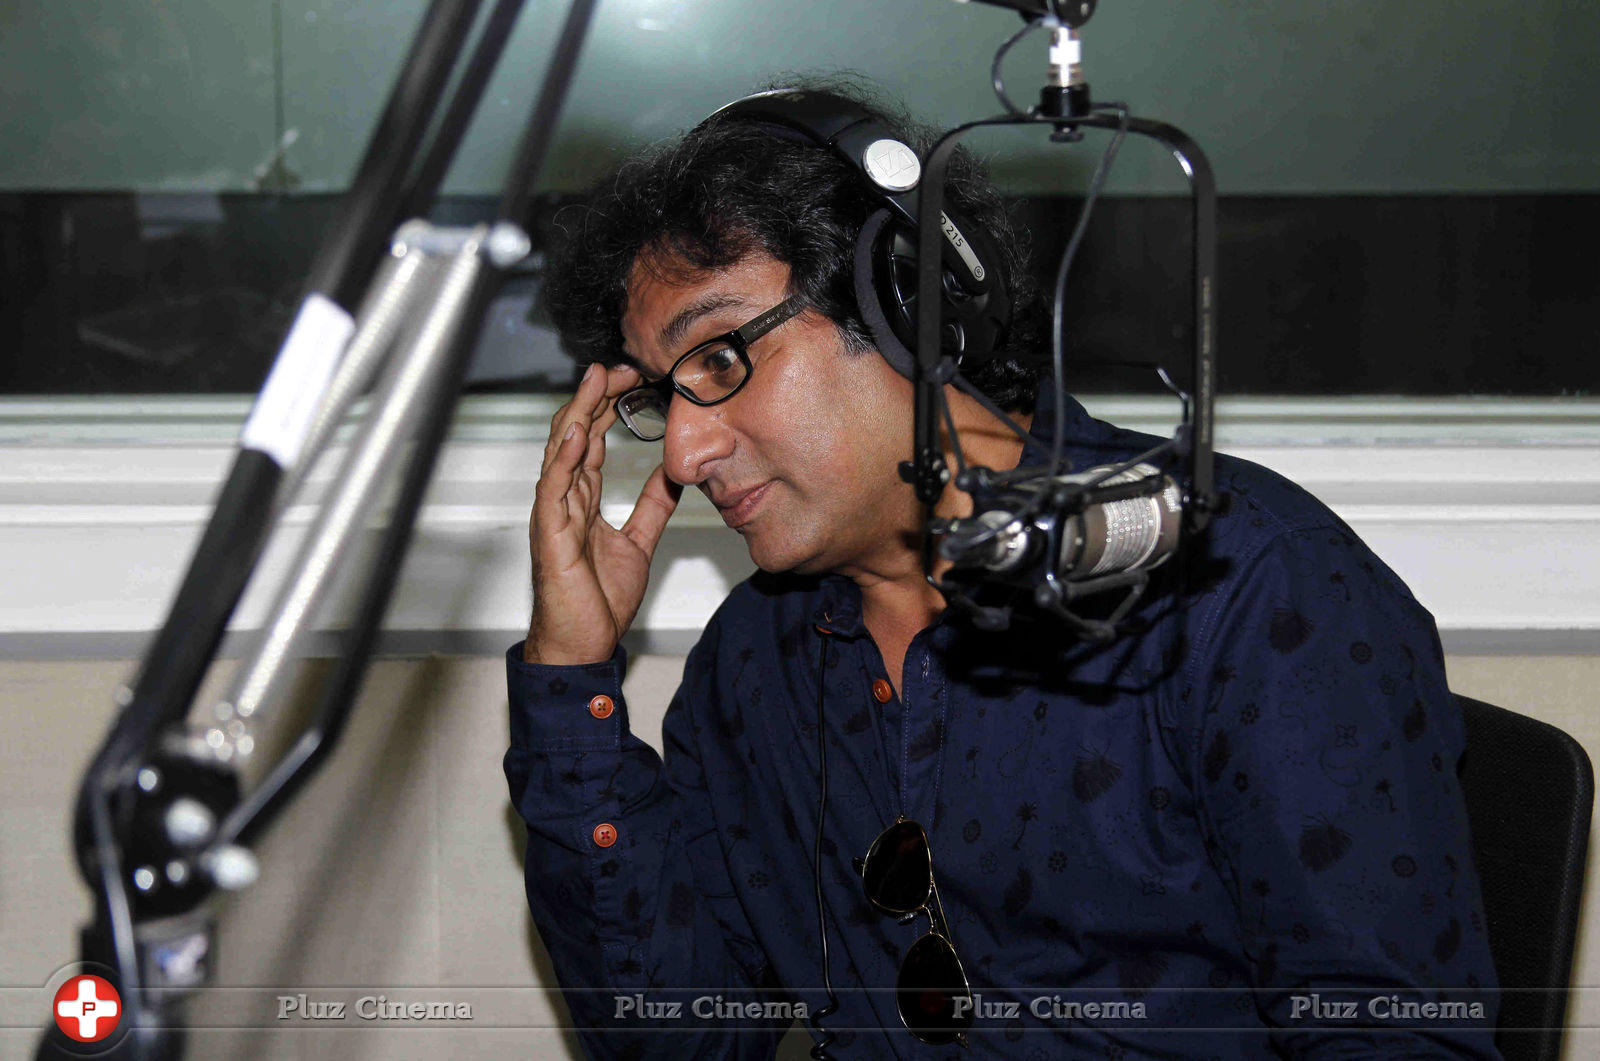 Talat Aziz - Carvaan E Ghazal most heard radio show on 92.7 BIG FM Photos | Picture 735529